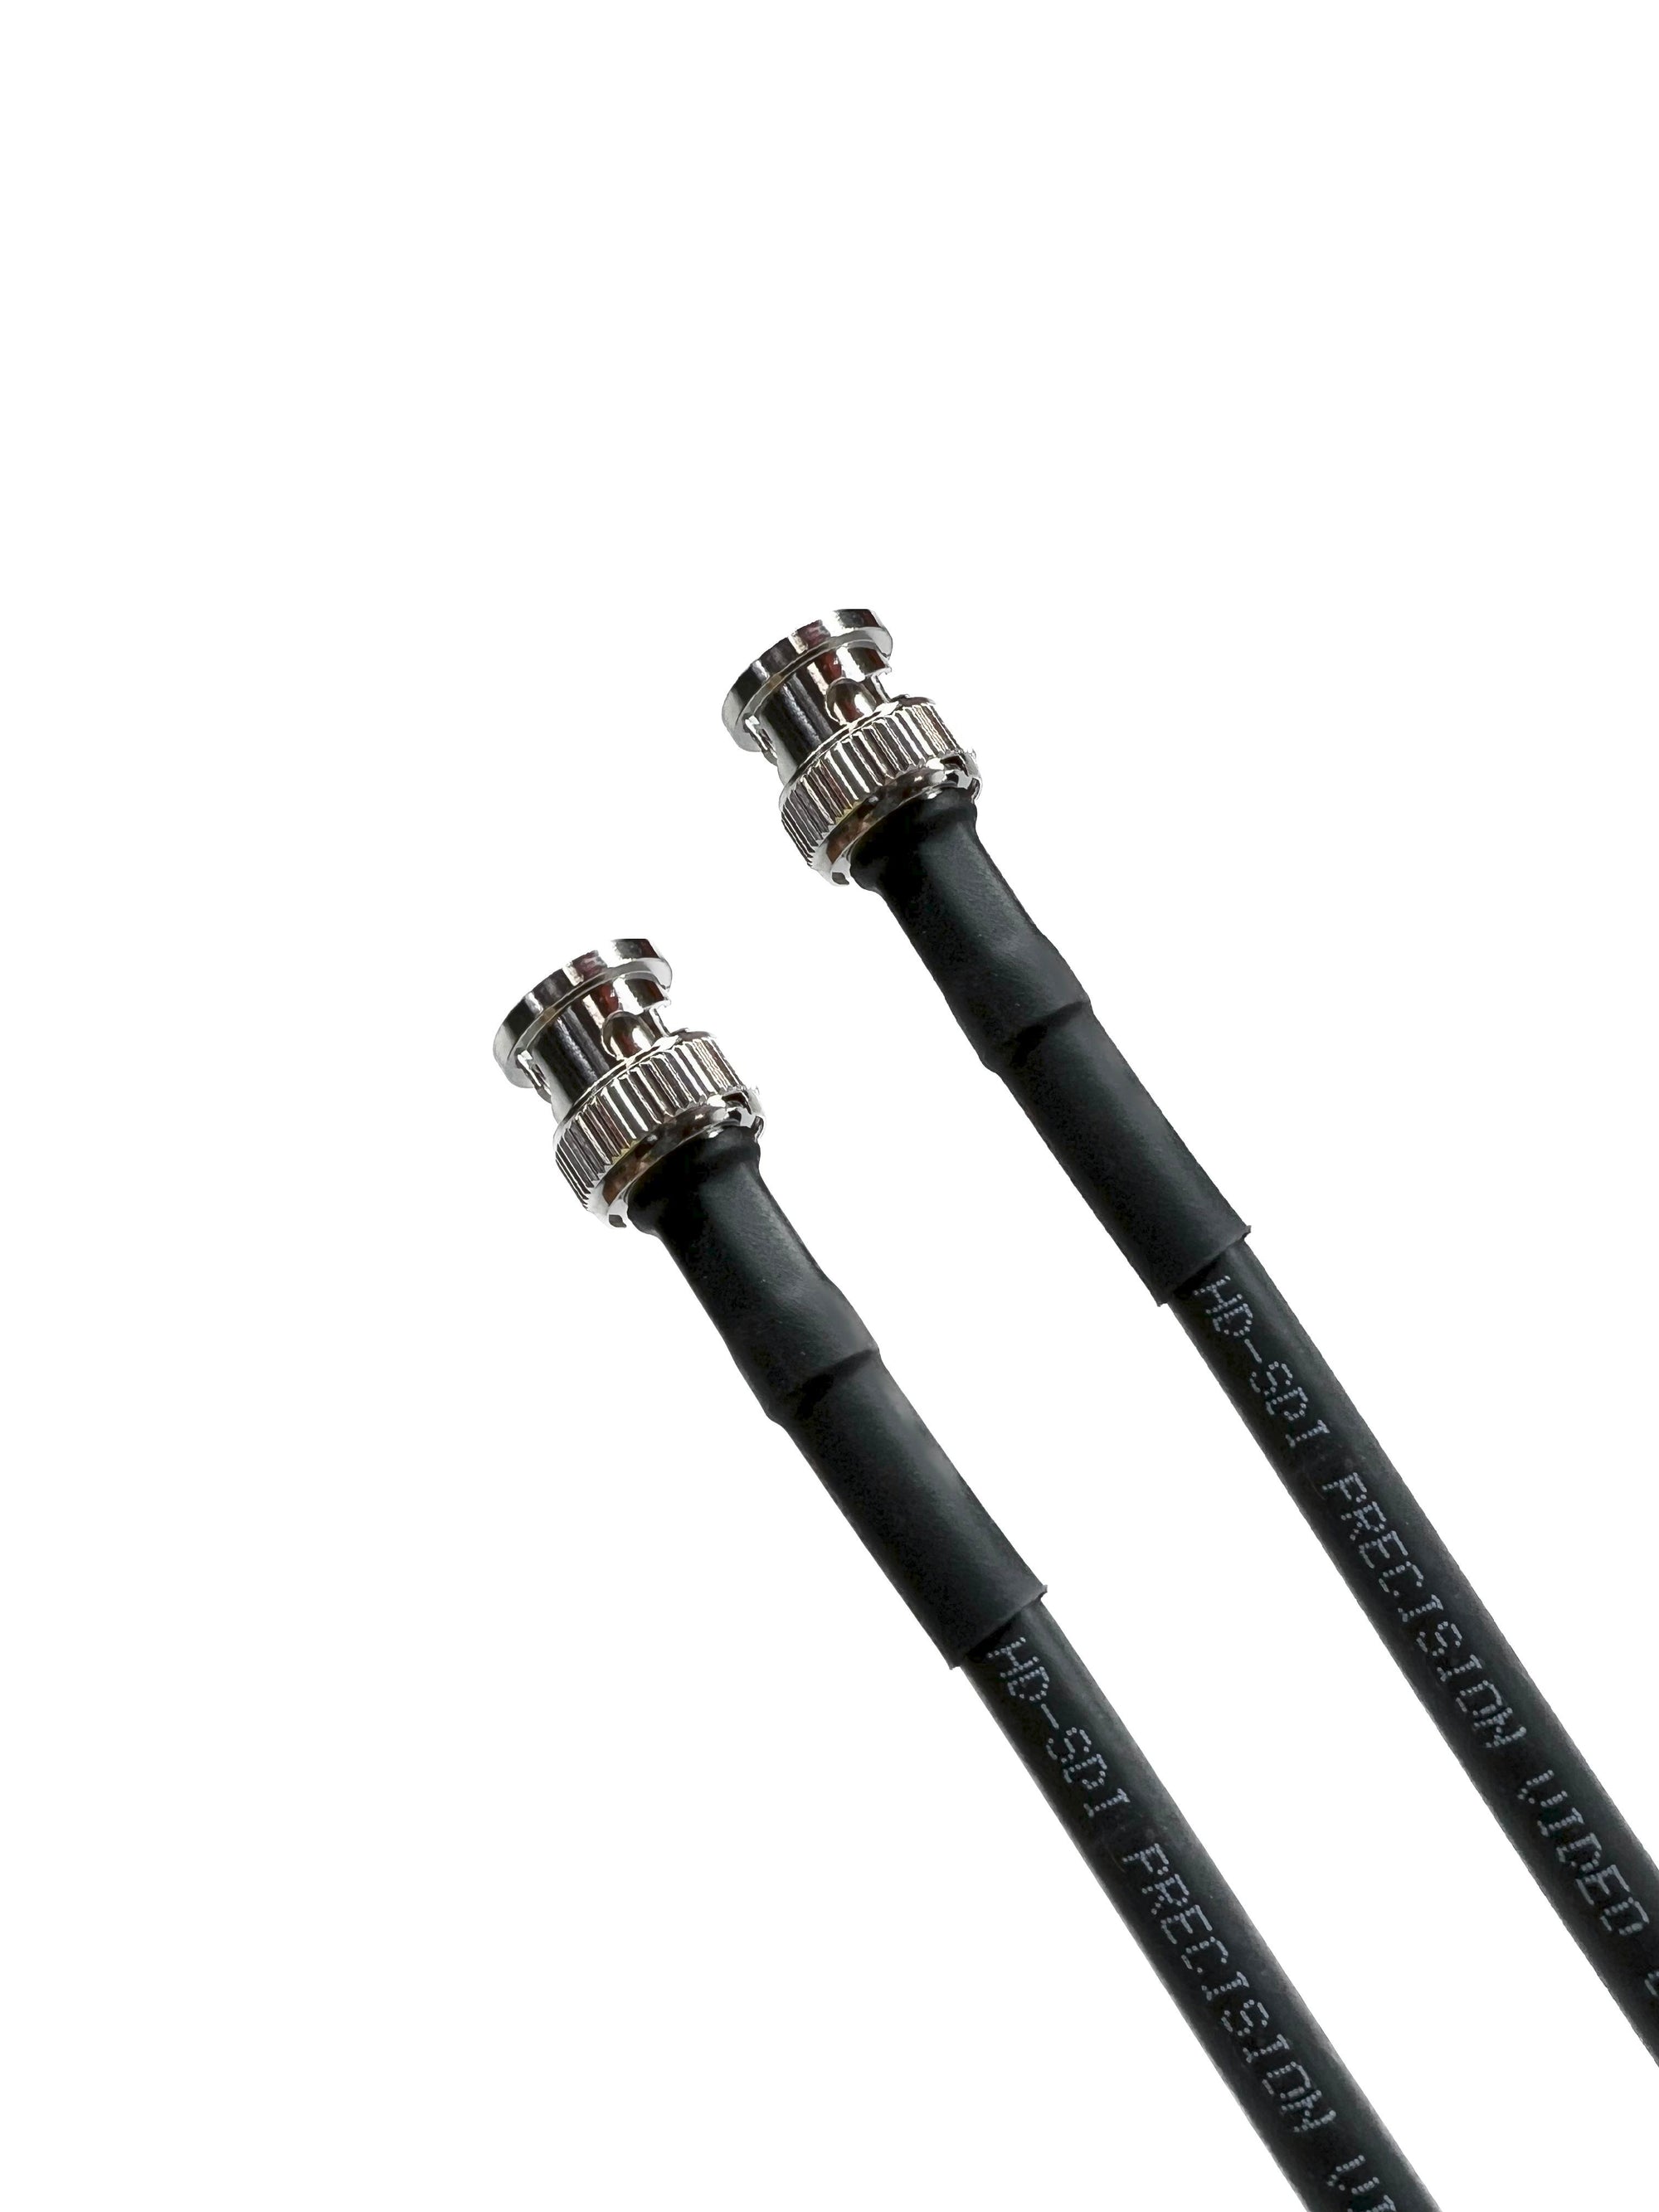 Belden 1694A 3G/6G HD-SDI RG6 BNC Video Cables - Custom Cable